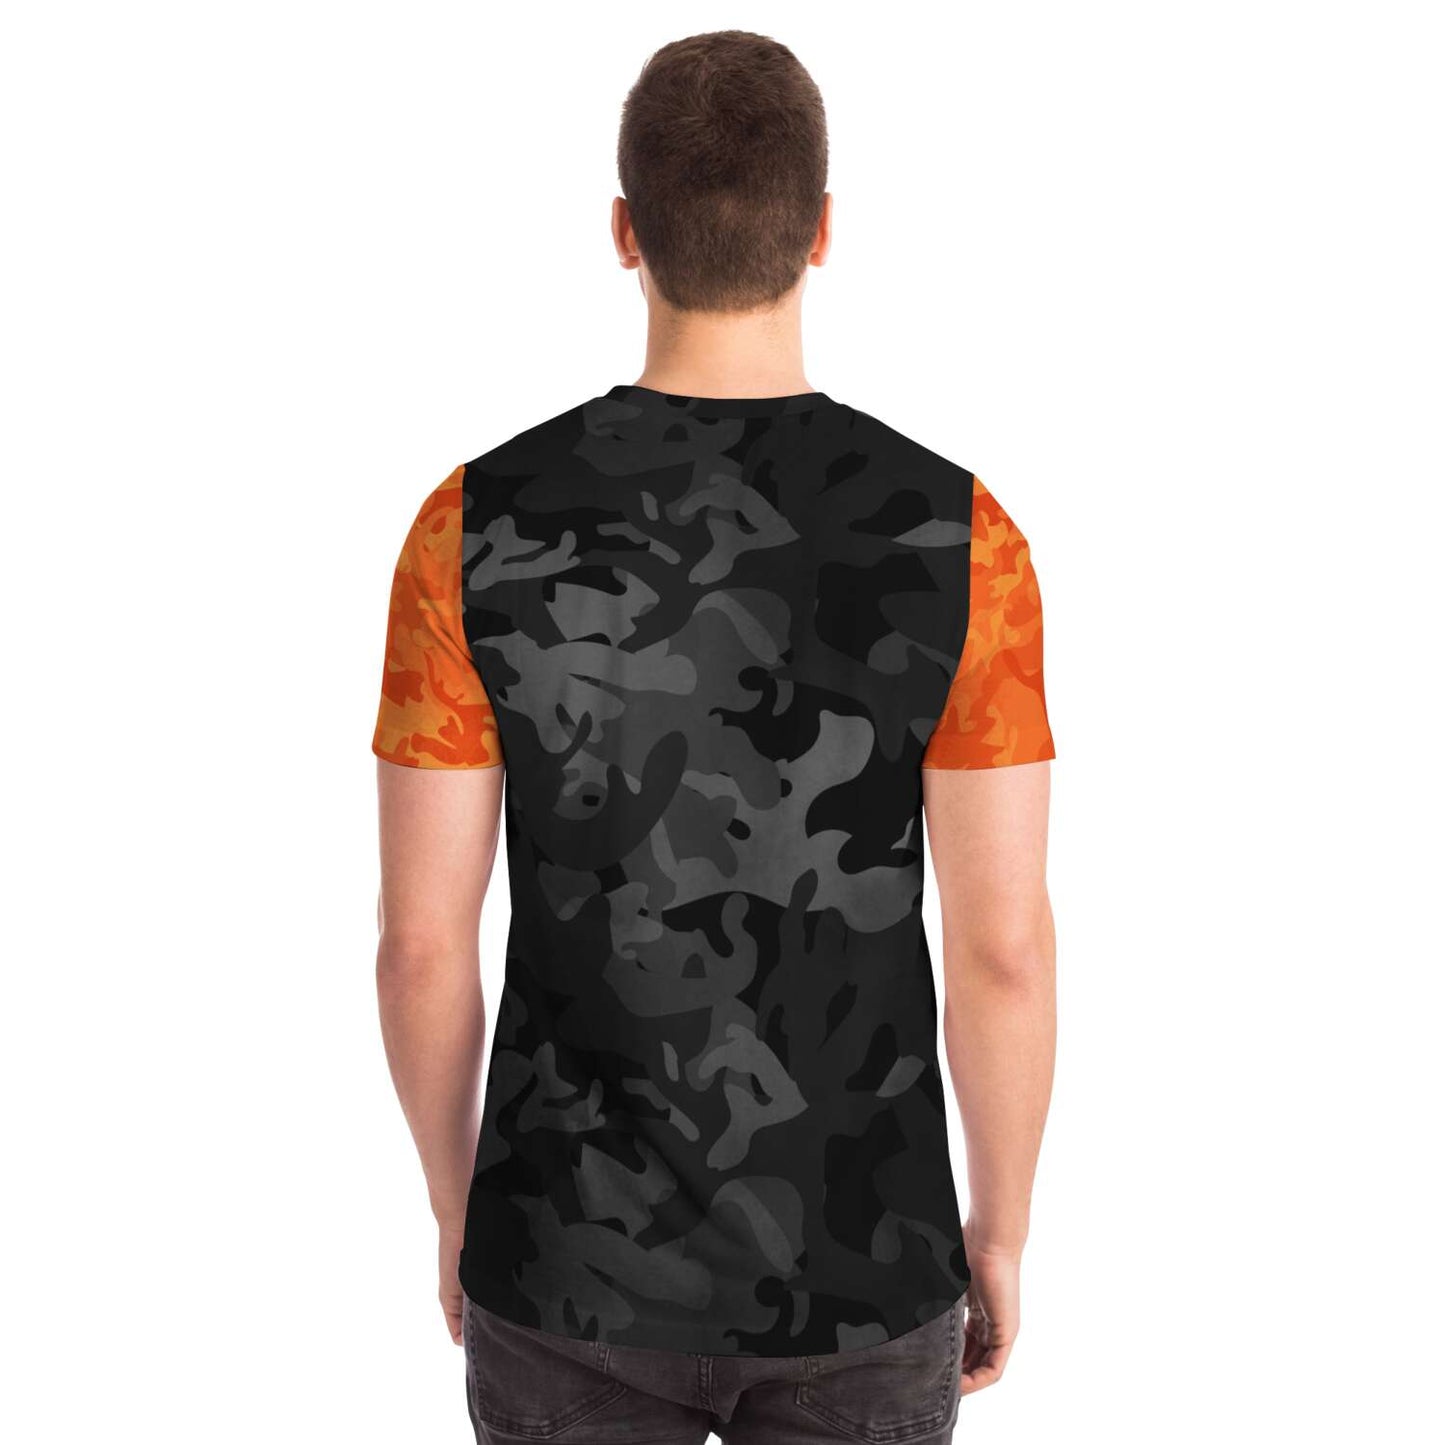 Black and Orange Camo Coon Hunting Shirt